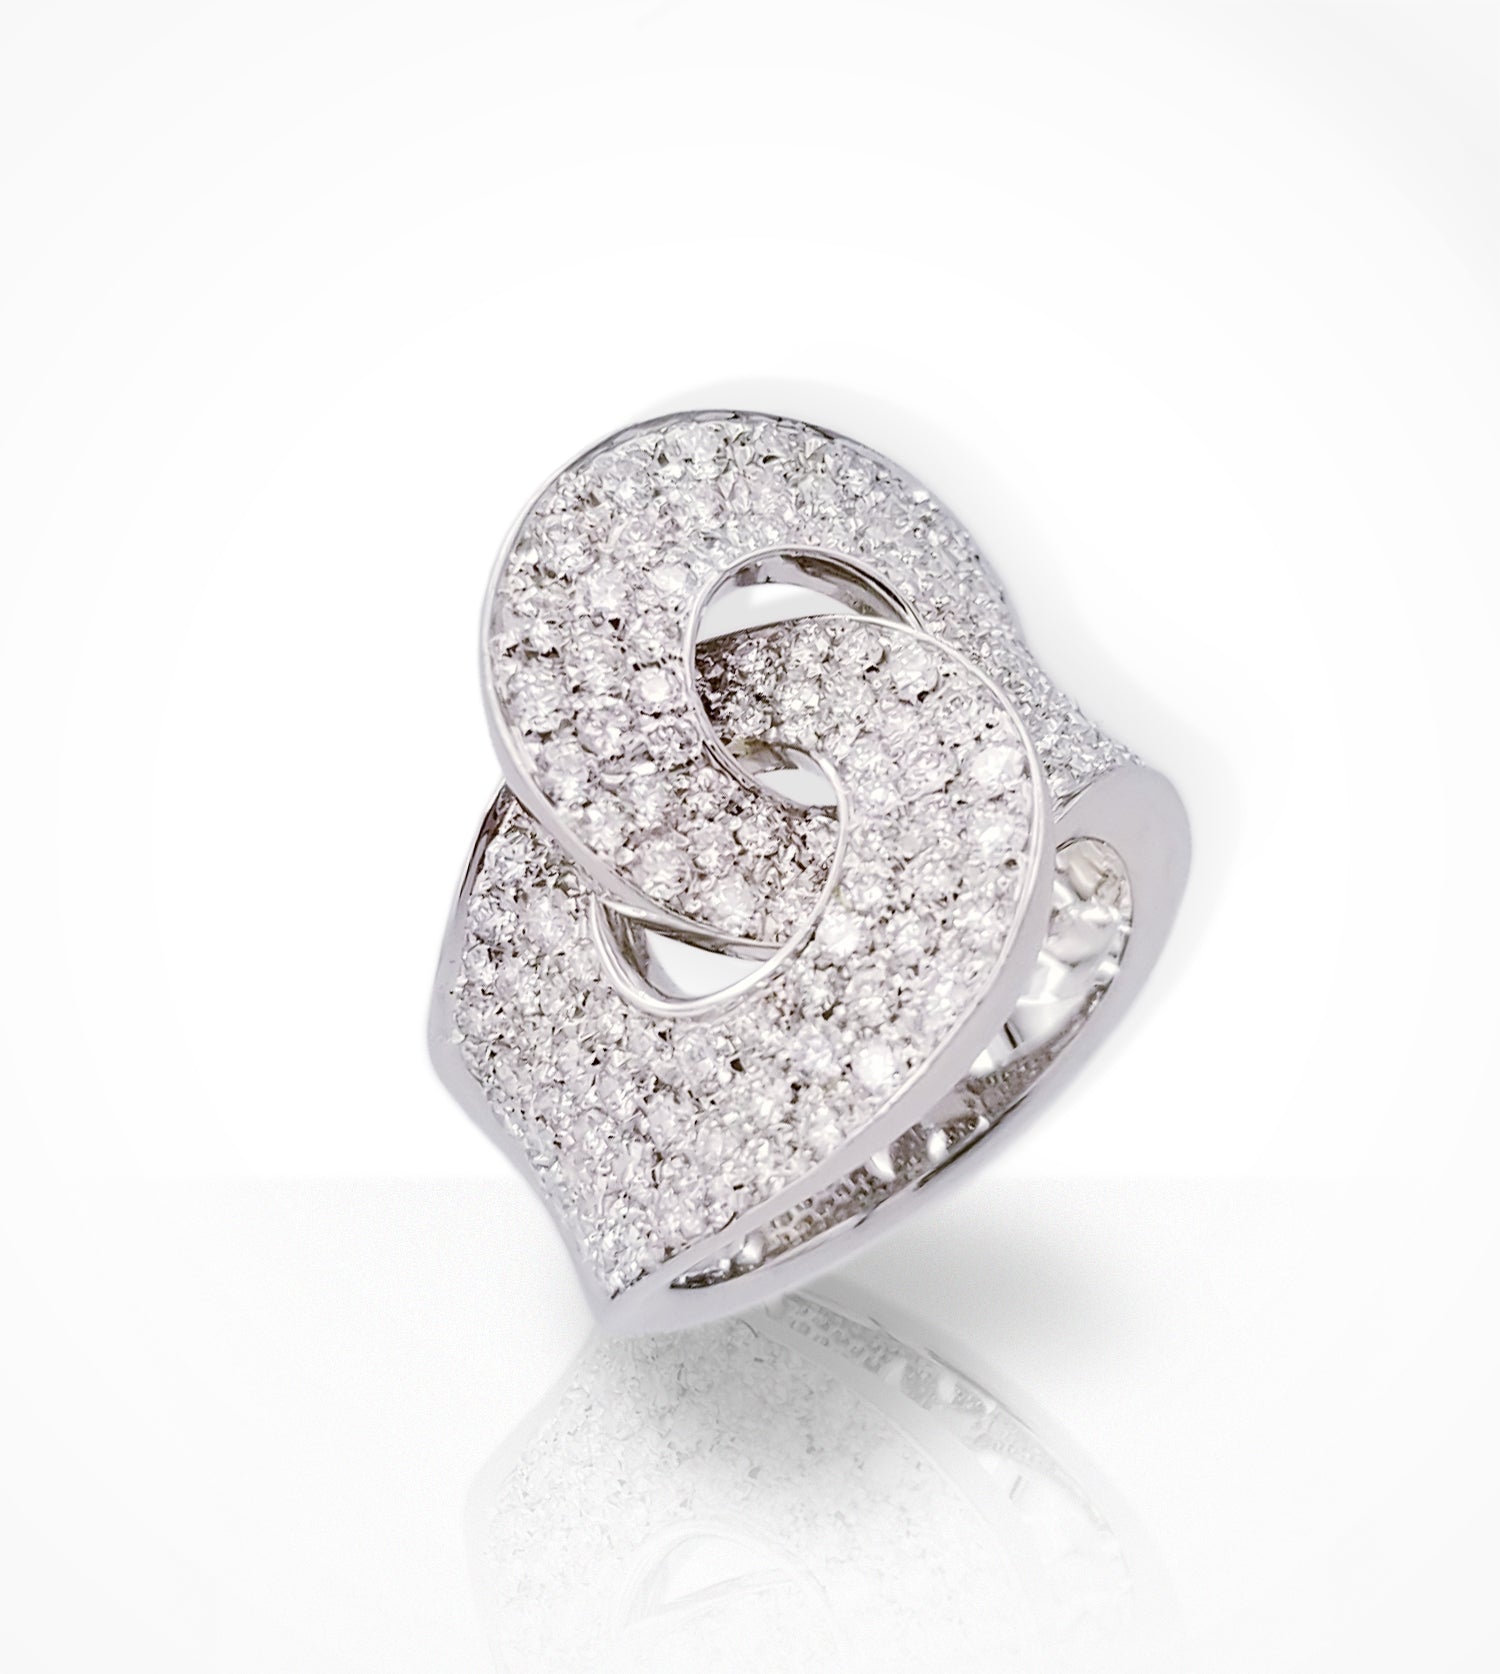 RL-005540 18K white gold interlocking pave diamond ring ready-to-wear jewellery at Secrett.ca in Toronto Downtown Yorkville